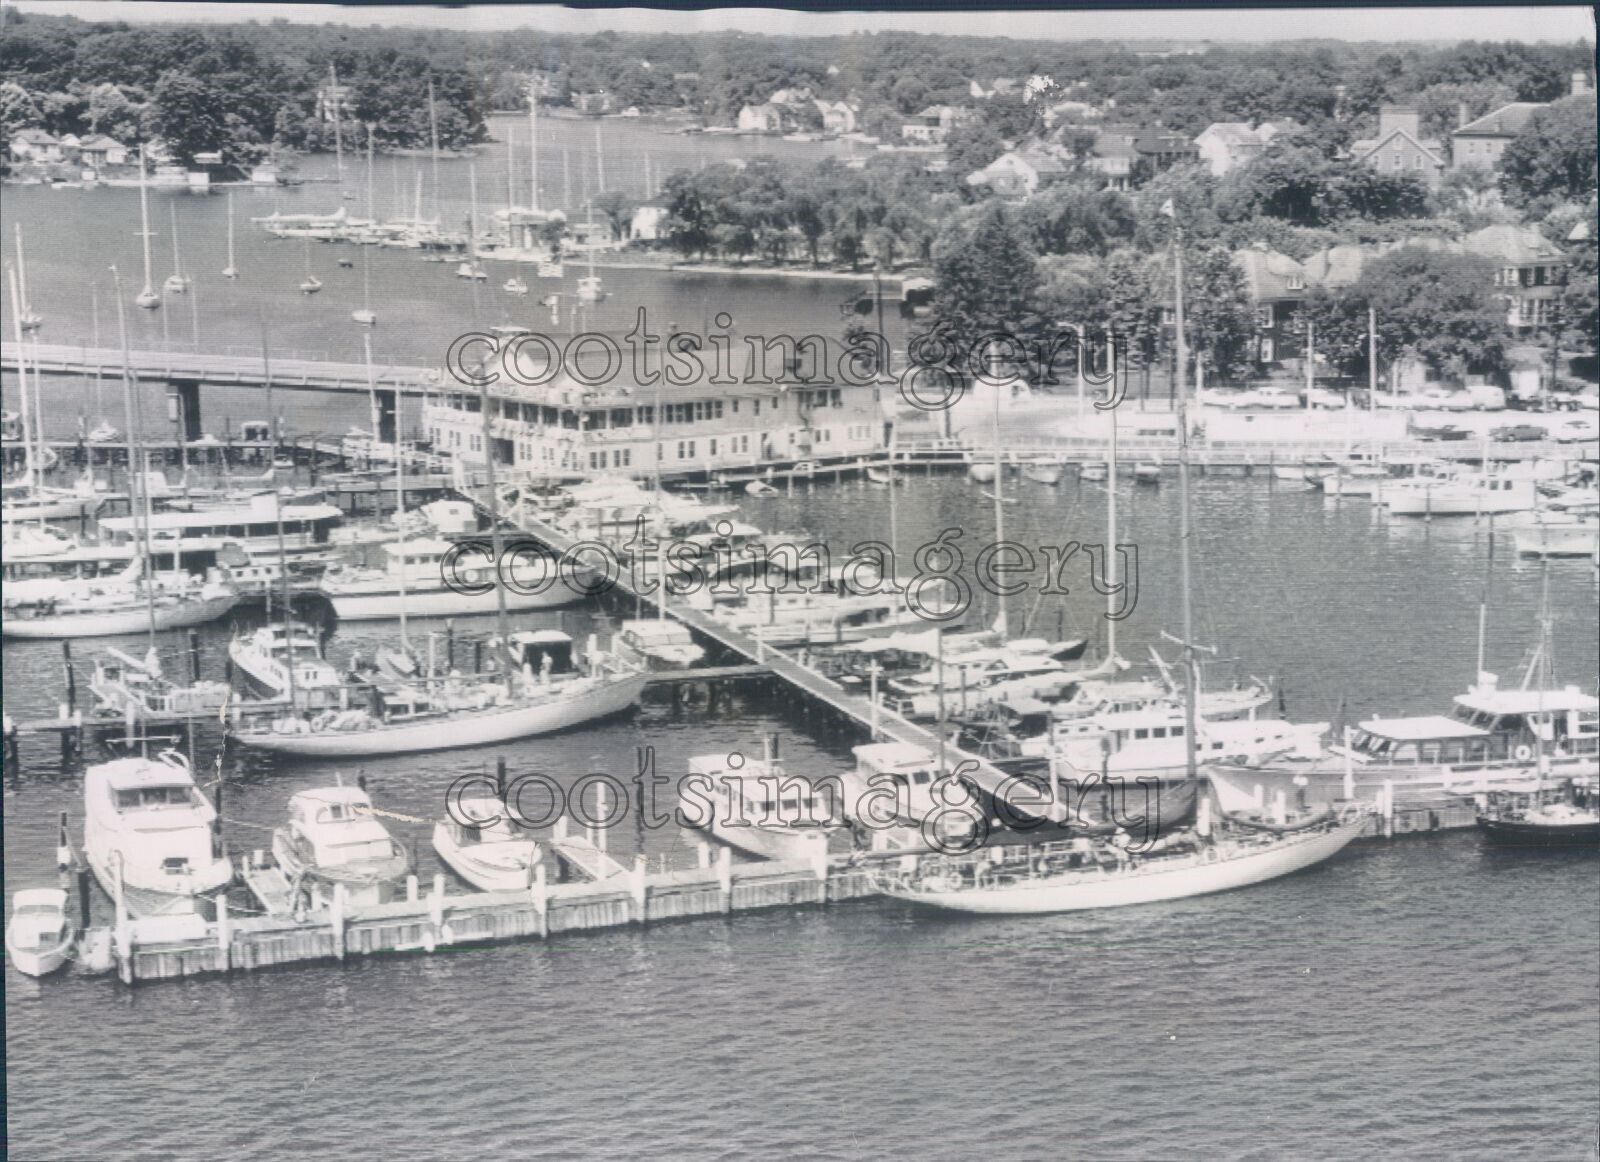 1957 Press Photo Yacht Club Basin 1950s Annapolis Maryland